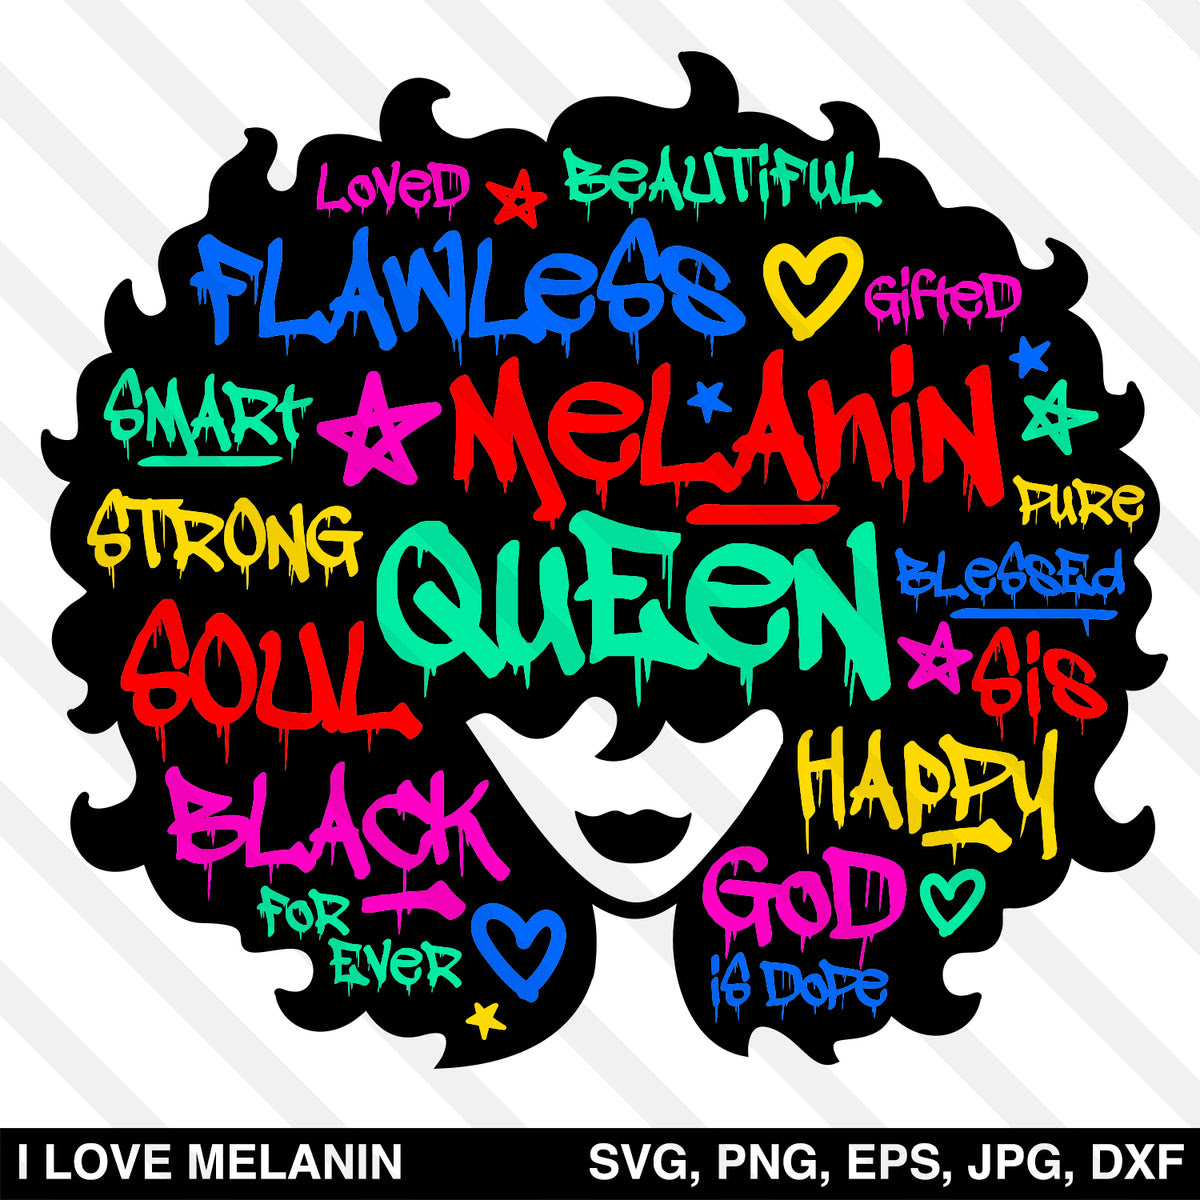 Download Graffiti Black Queen Afro Woman SVG - I Love Melanin